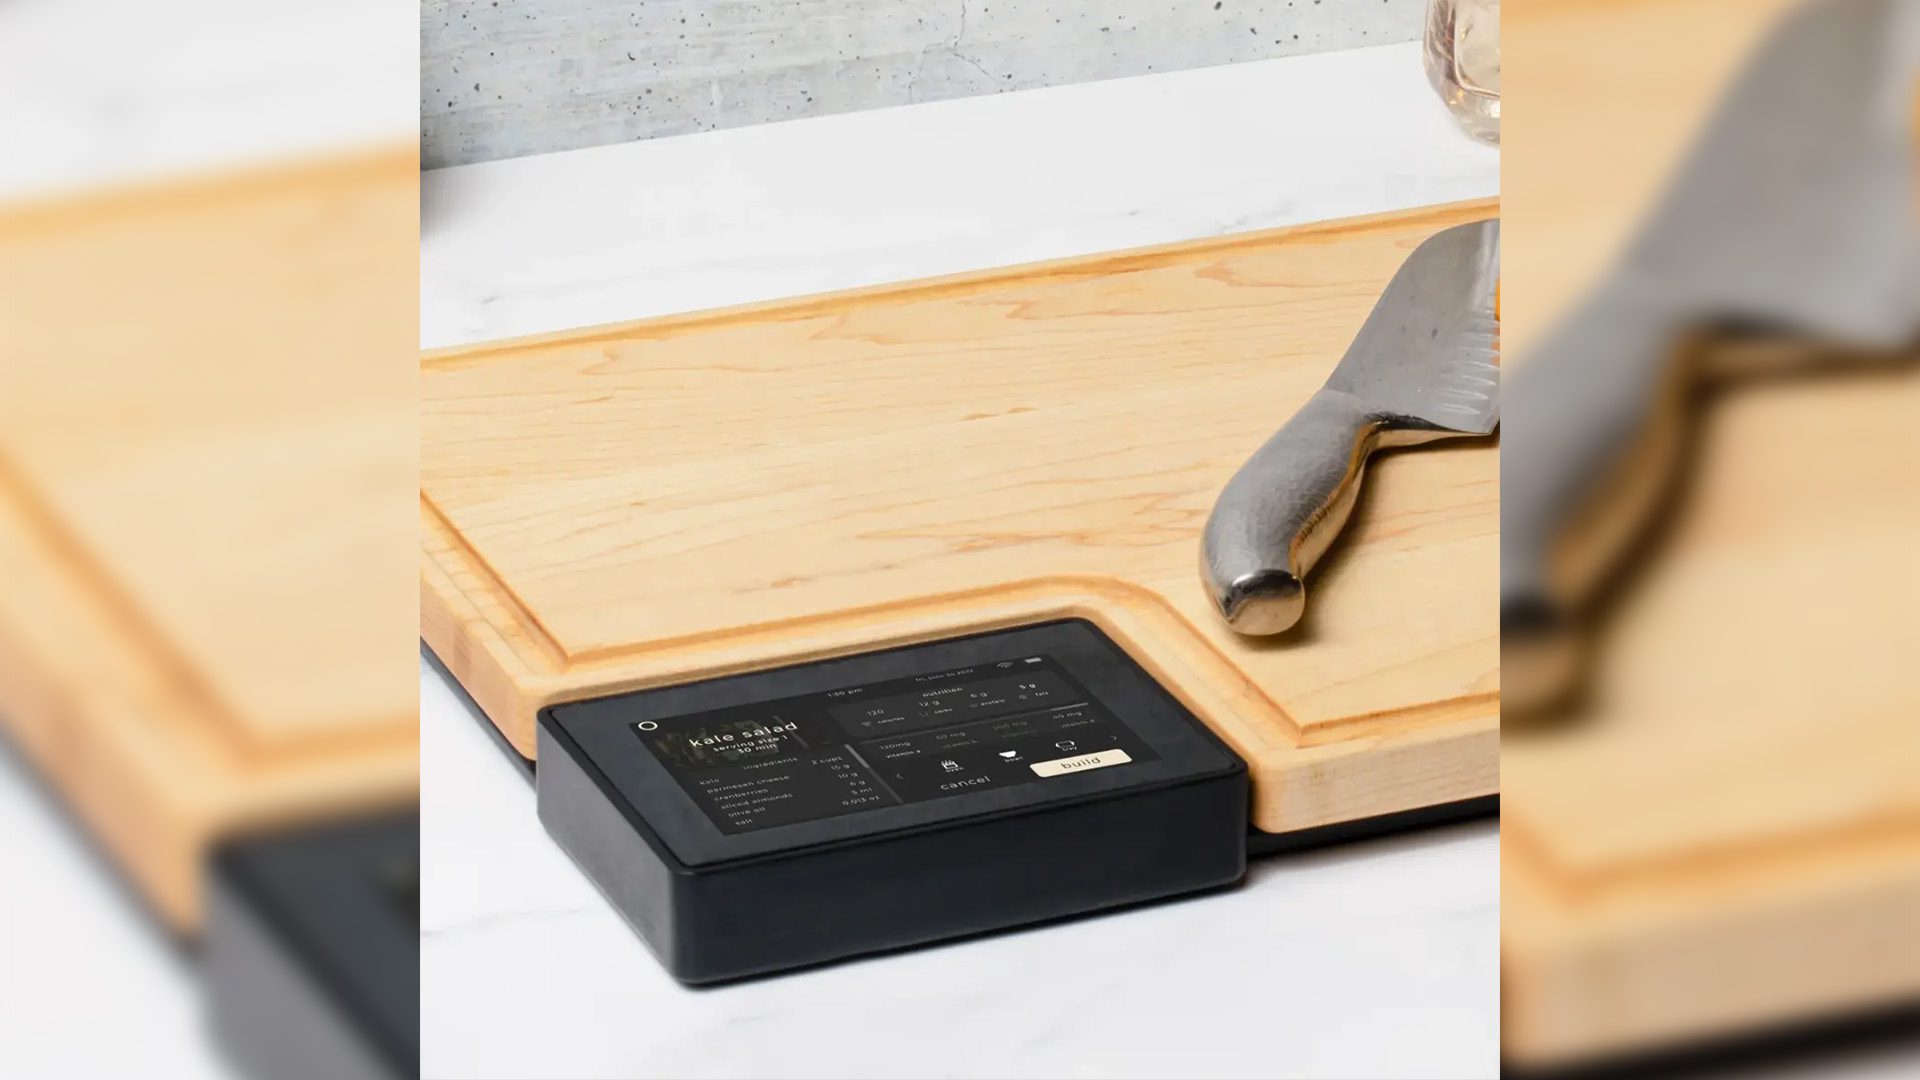 Versaware's smart cutting board